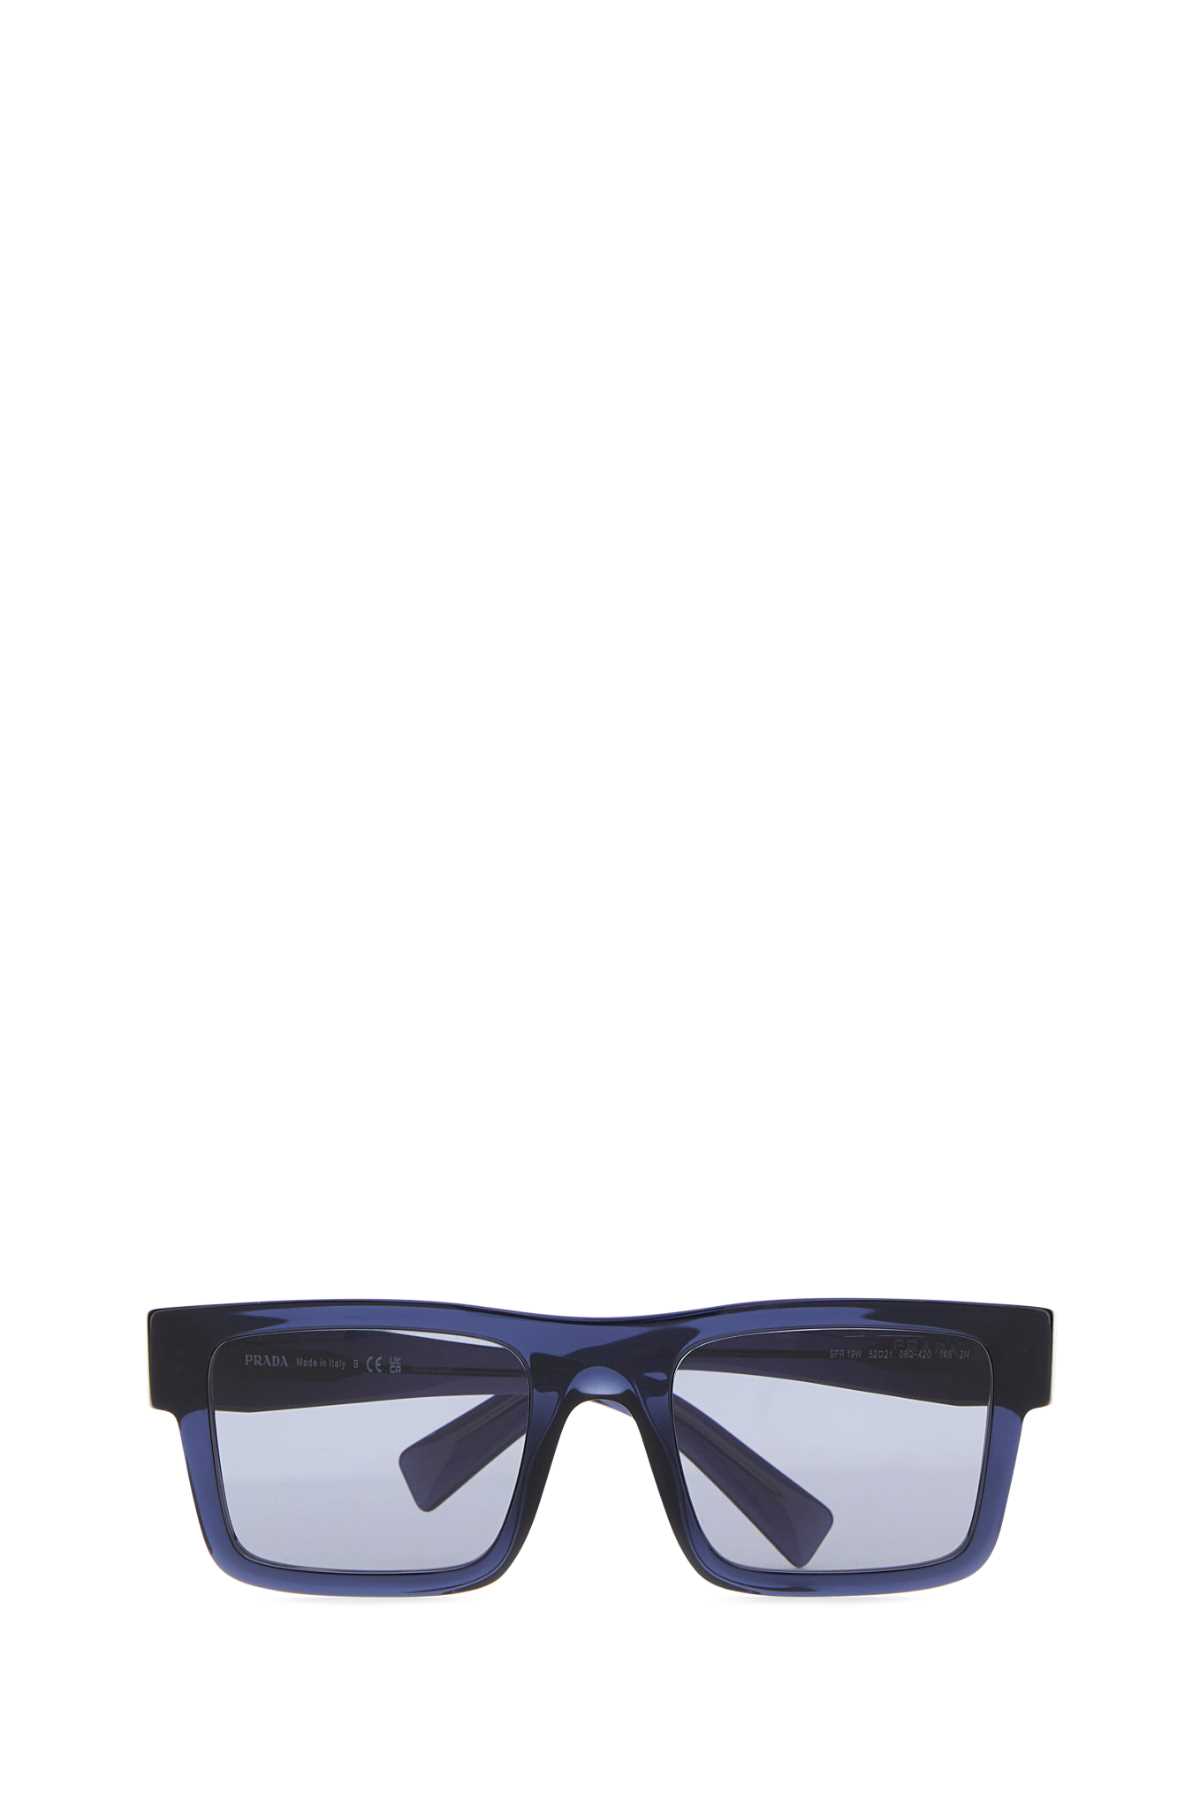 Shop Prada Dark Blue Acetate Sunglasses In Lensesbluette